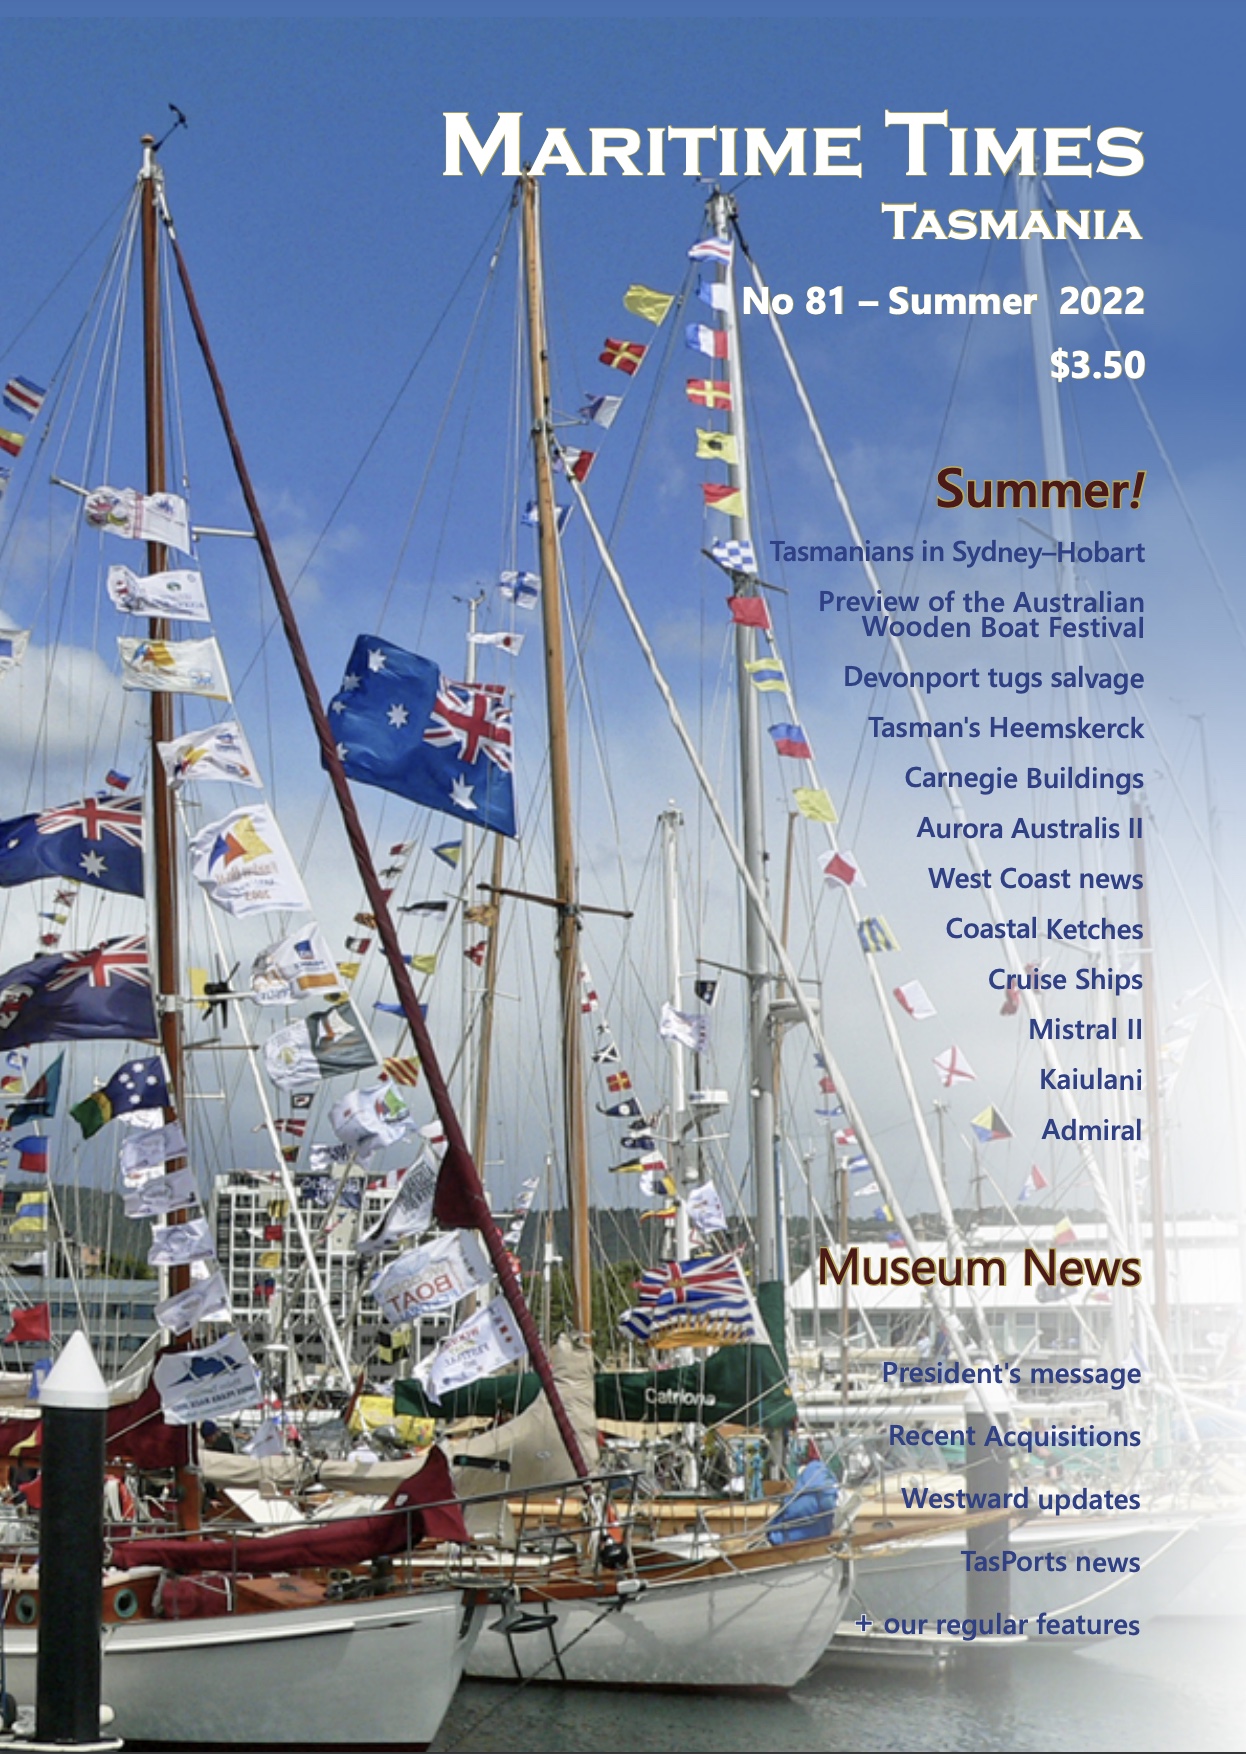 Maritime Times Tasmania no. 81 Summer 2022